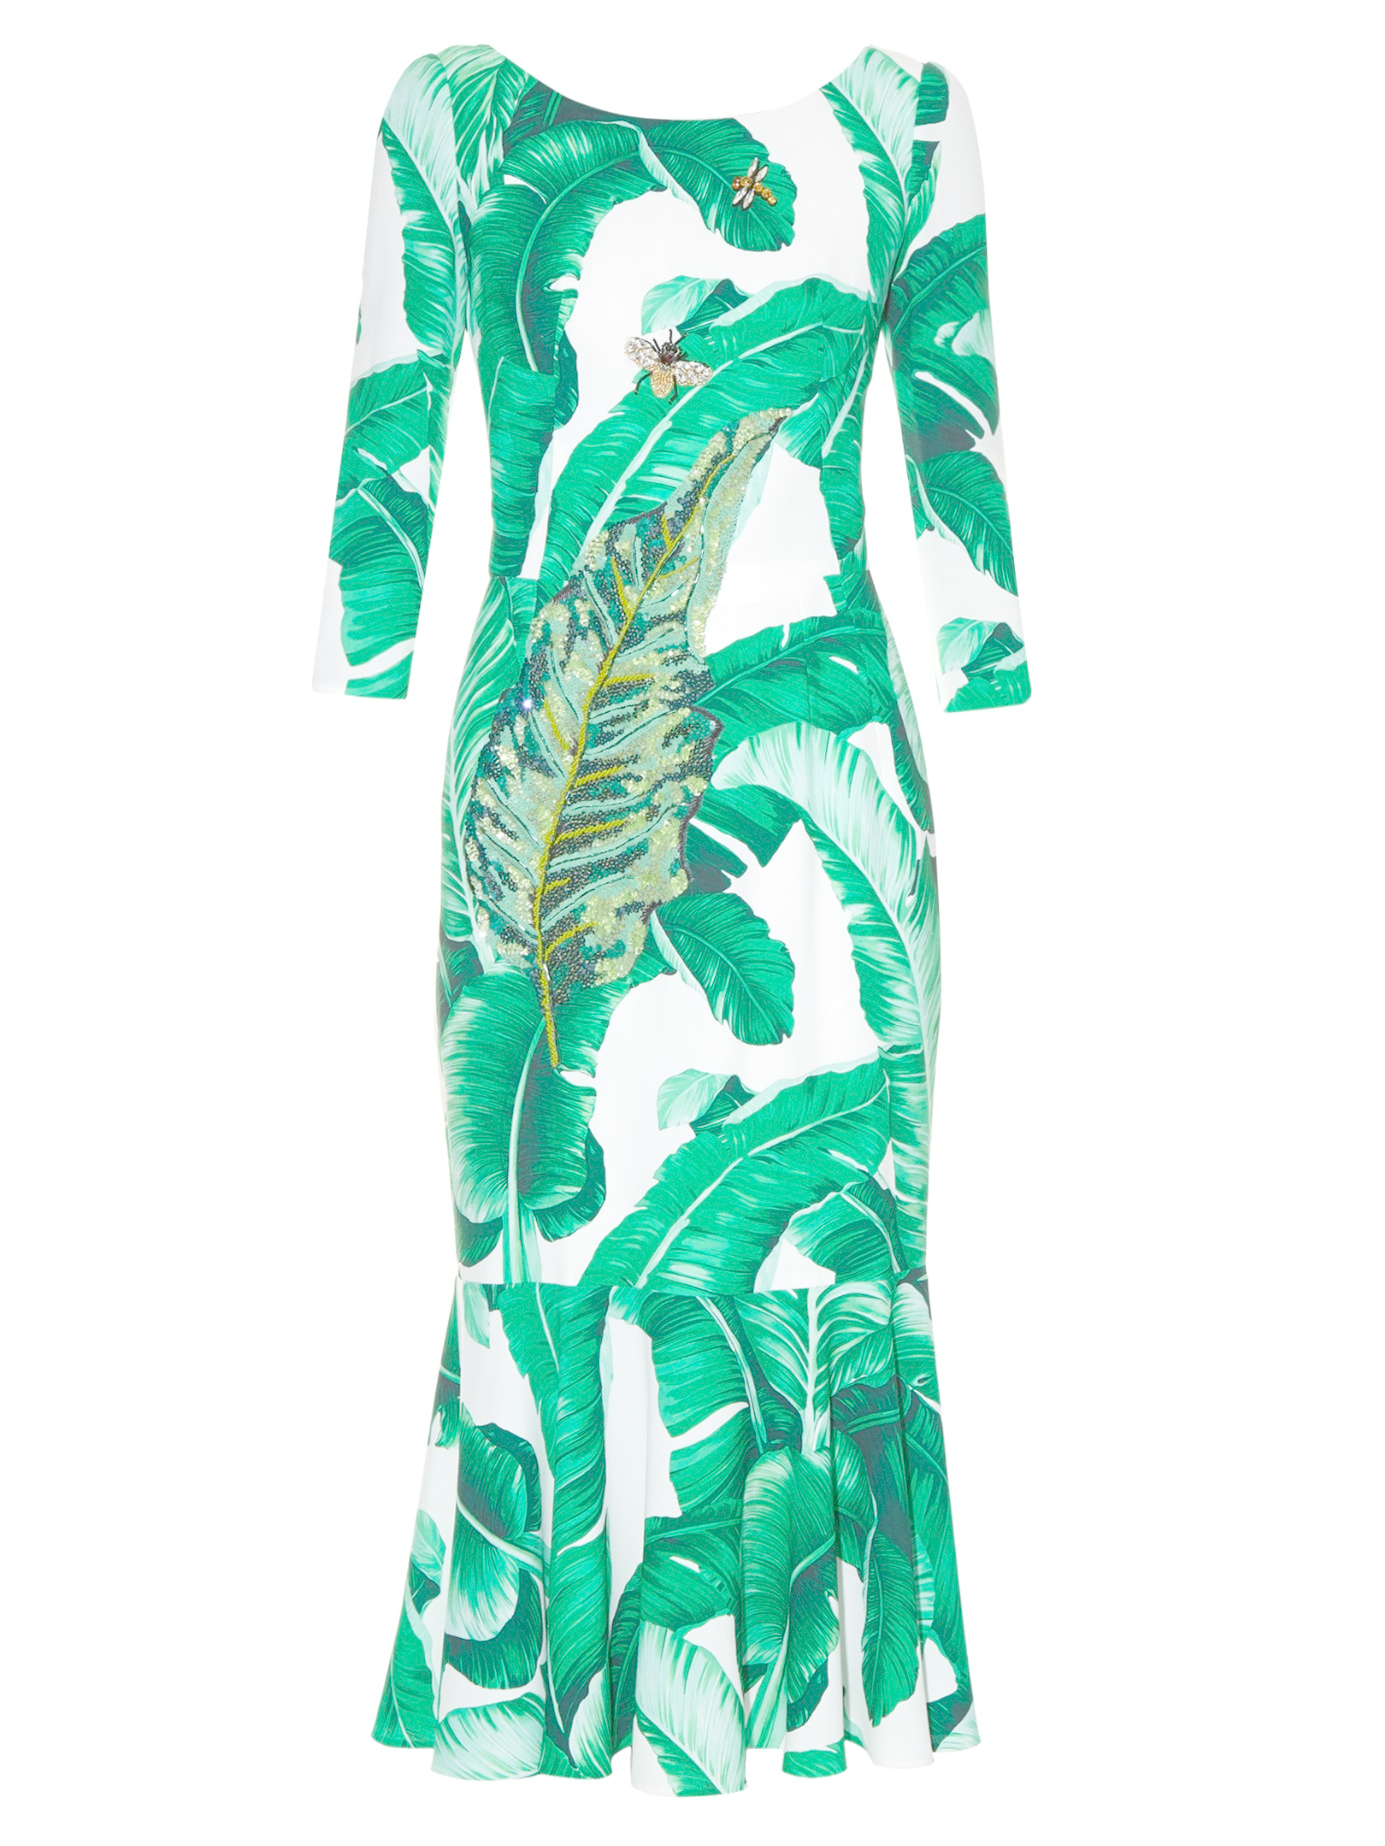 Dolce & Gabbana Banana Leaf-print Embellished Dress in Green | Lyst